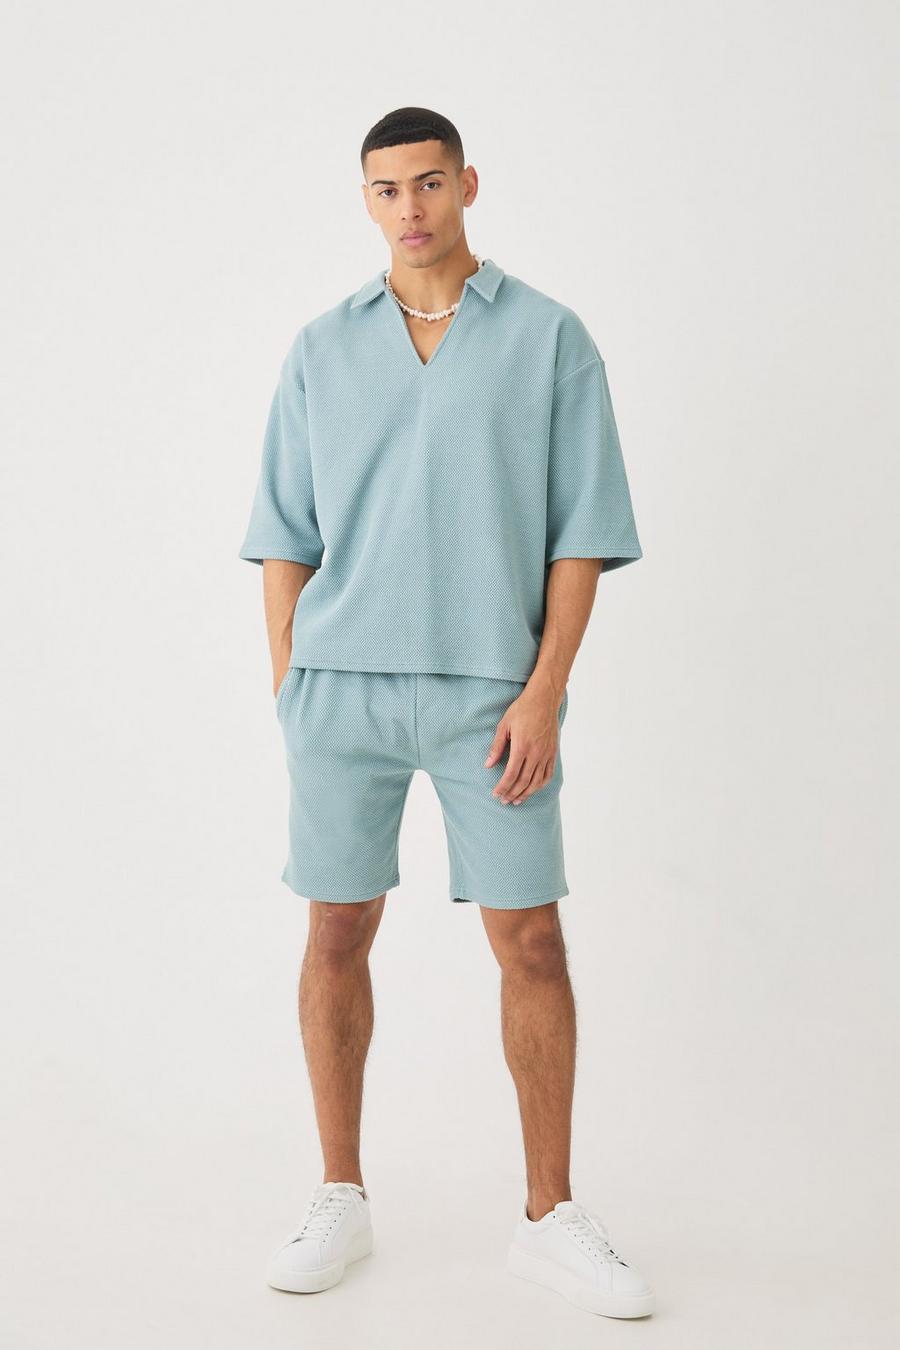 Kastiges Oversize Poloshirt mit V-Ausschnitt und Shorts, Slate blue